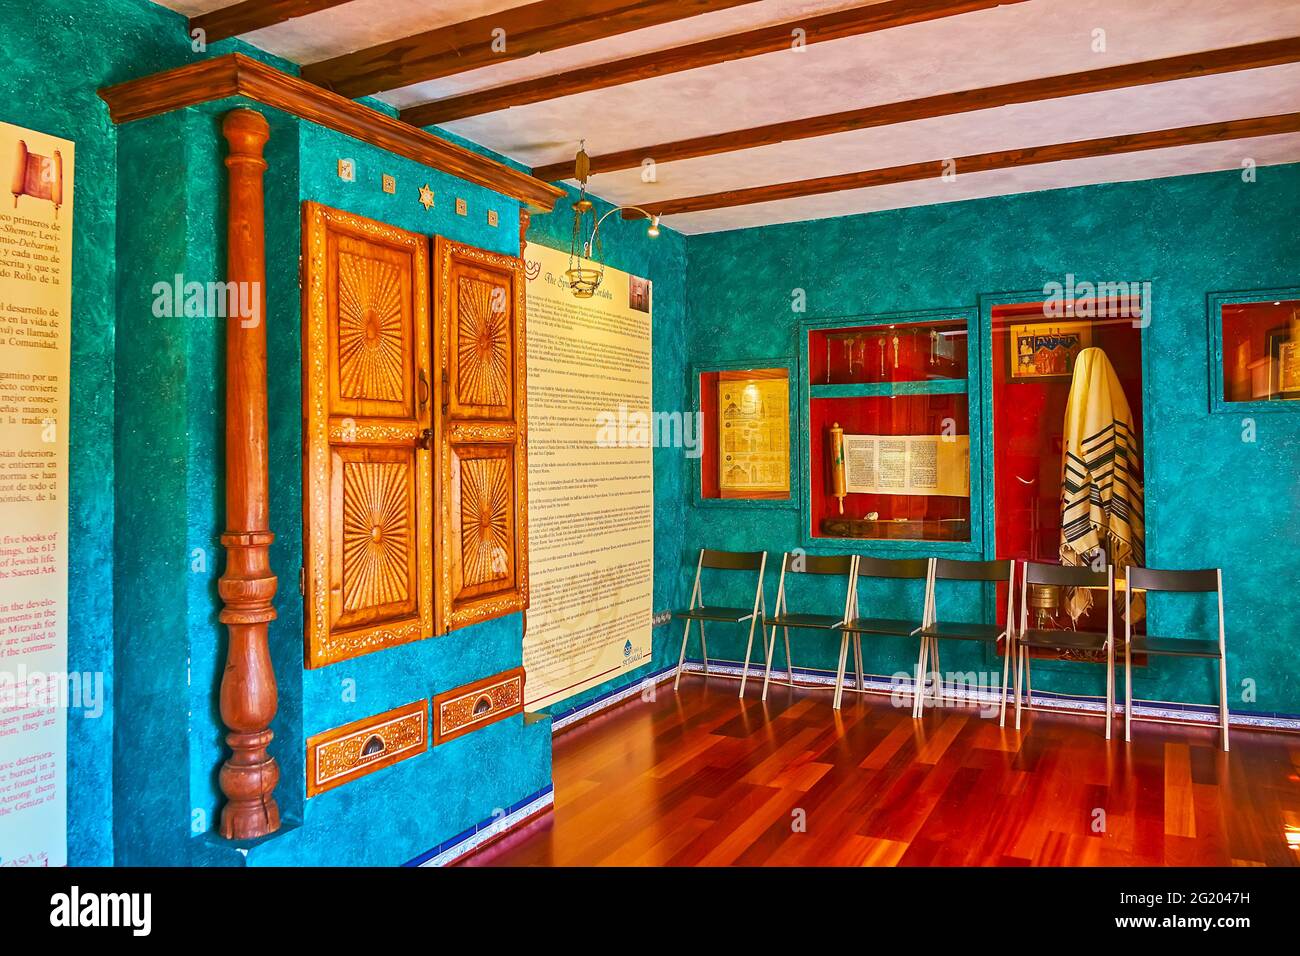 CORDOBA, SPAIN - SEPTEMBER 30, 2019: The hall of Casa de Sefarad or the House of Memories with ornate Torah Ark and some historic ritual Judaical item Stock Photo